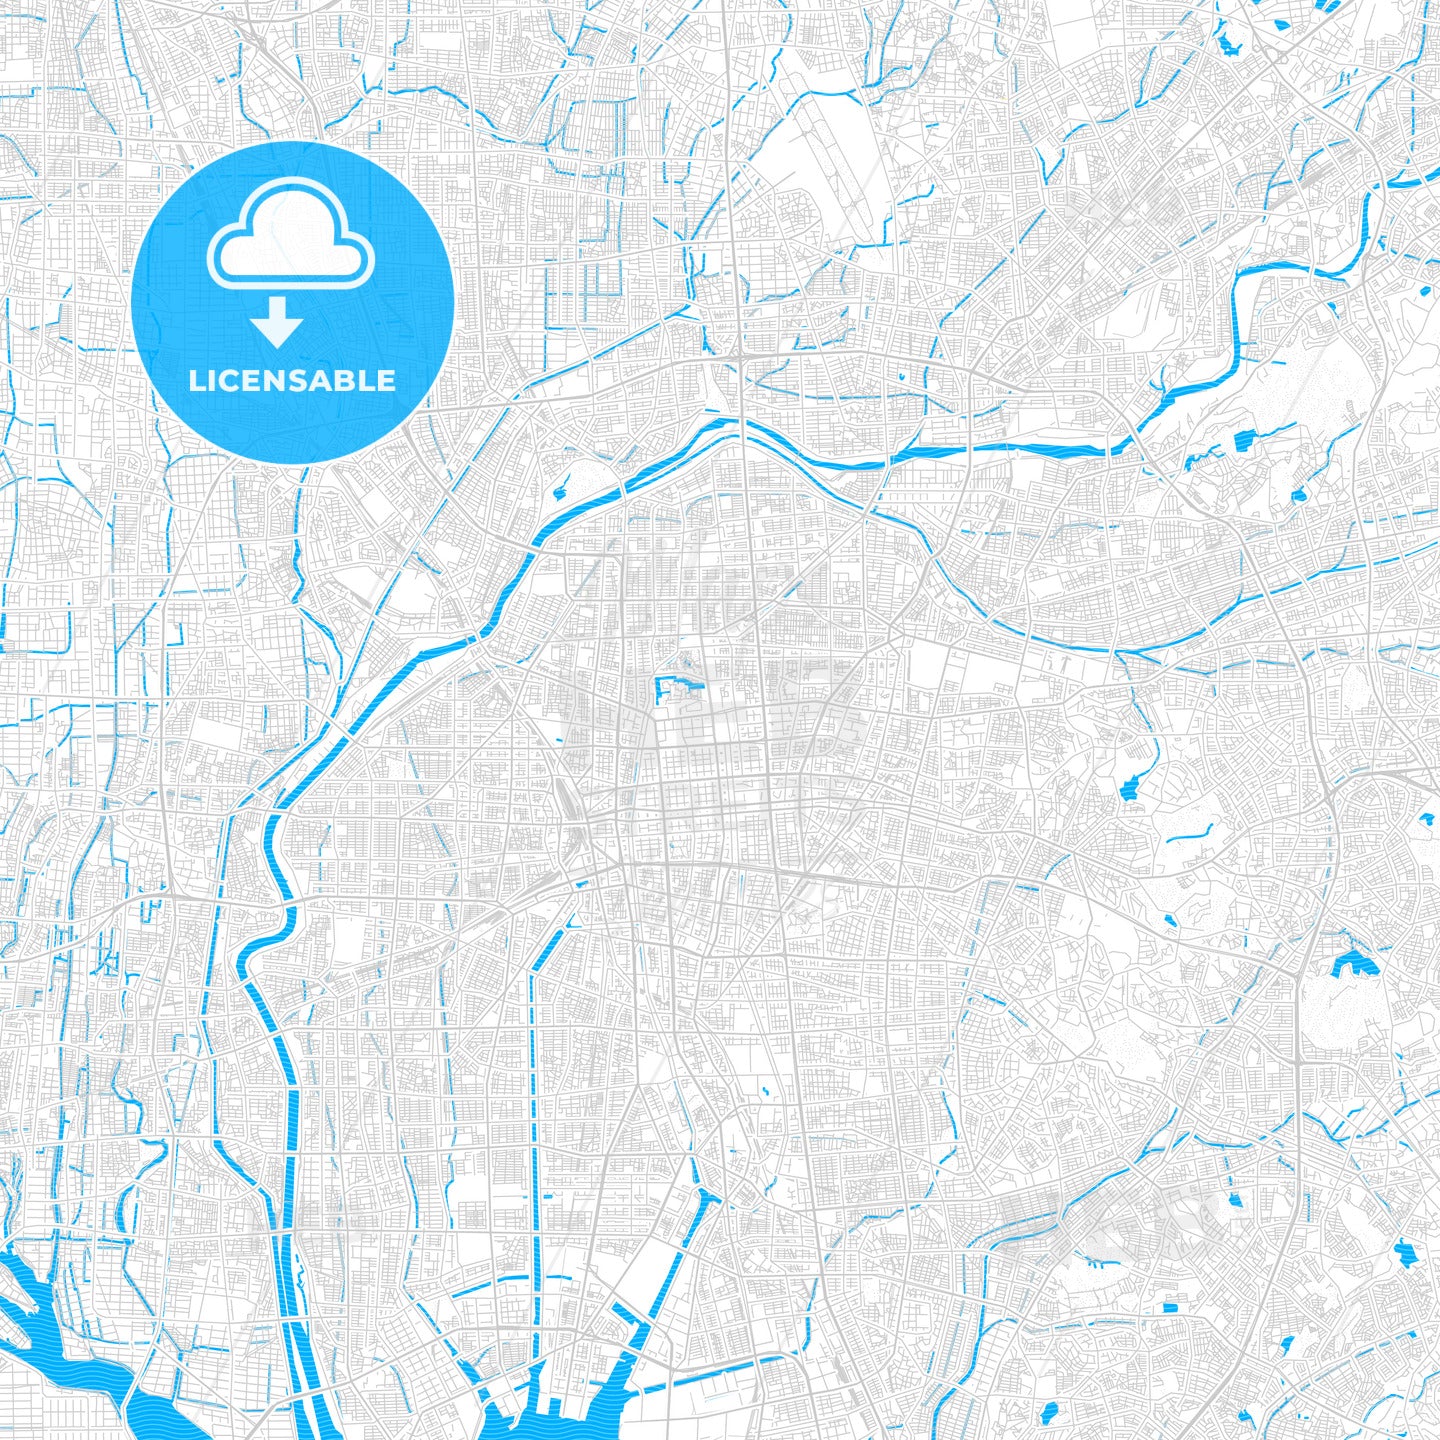 Nagoya, Japan PDF vector map with water in focus